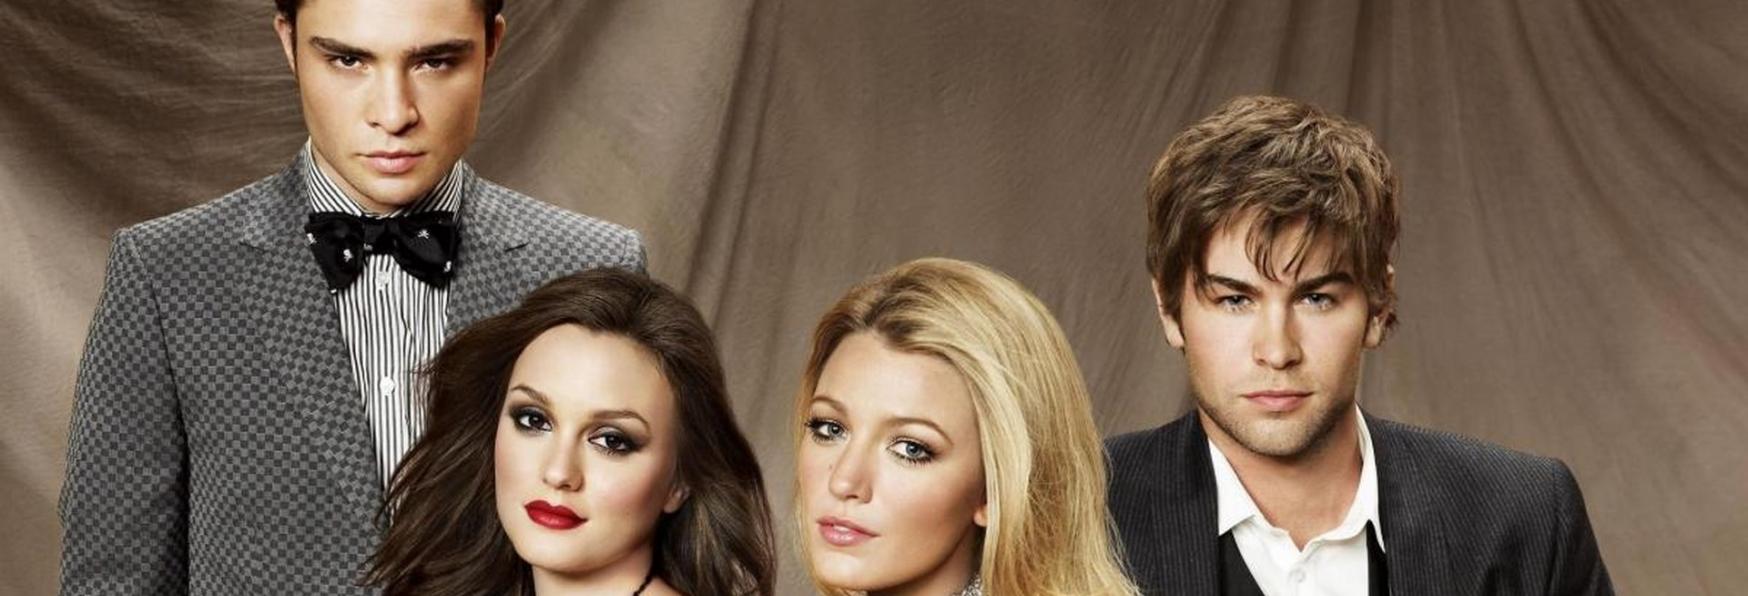 Gossip Girl: Jordan Alexander nel Cast della Serie TV Reboot targata HBO Max